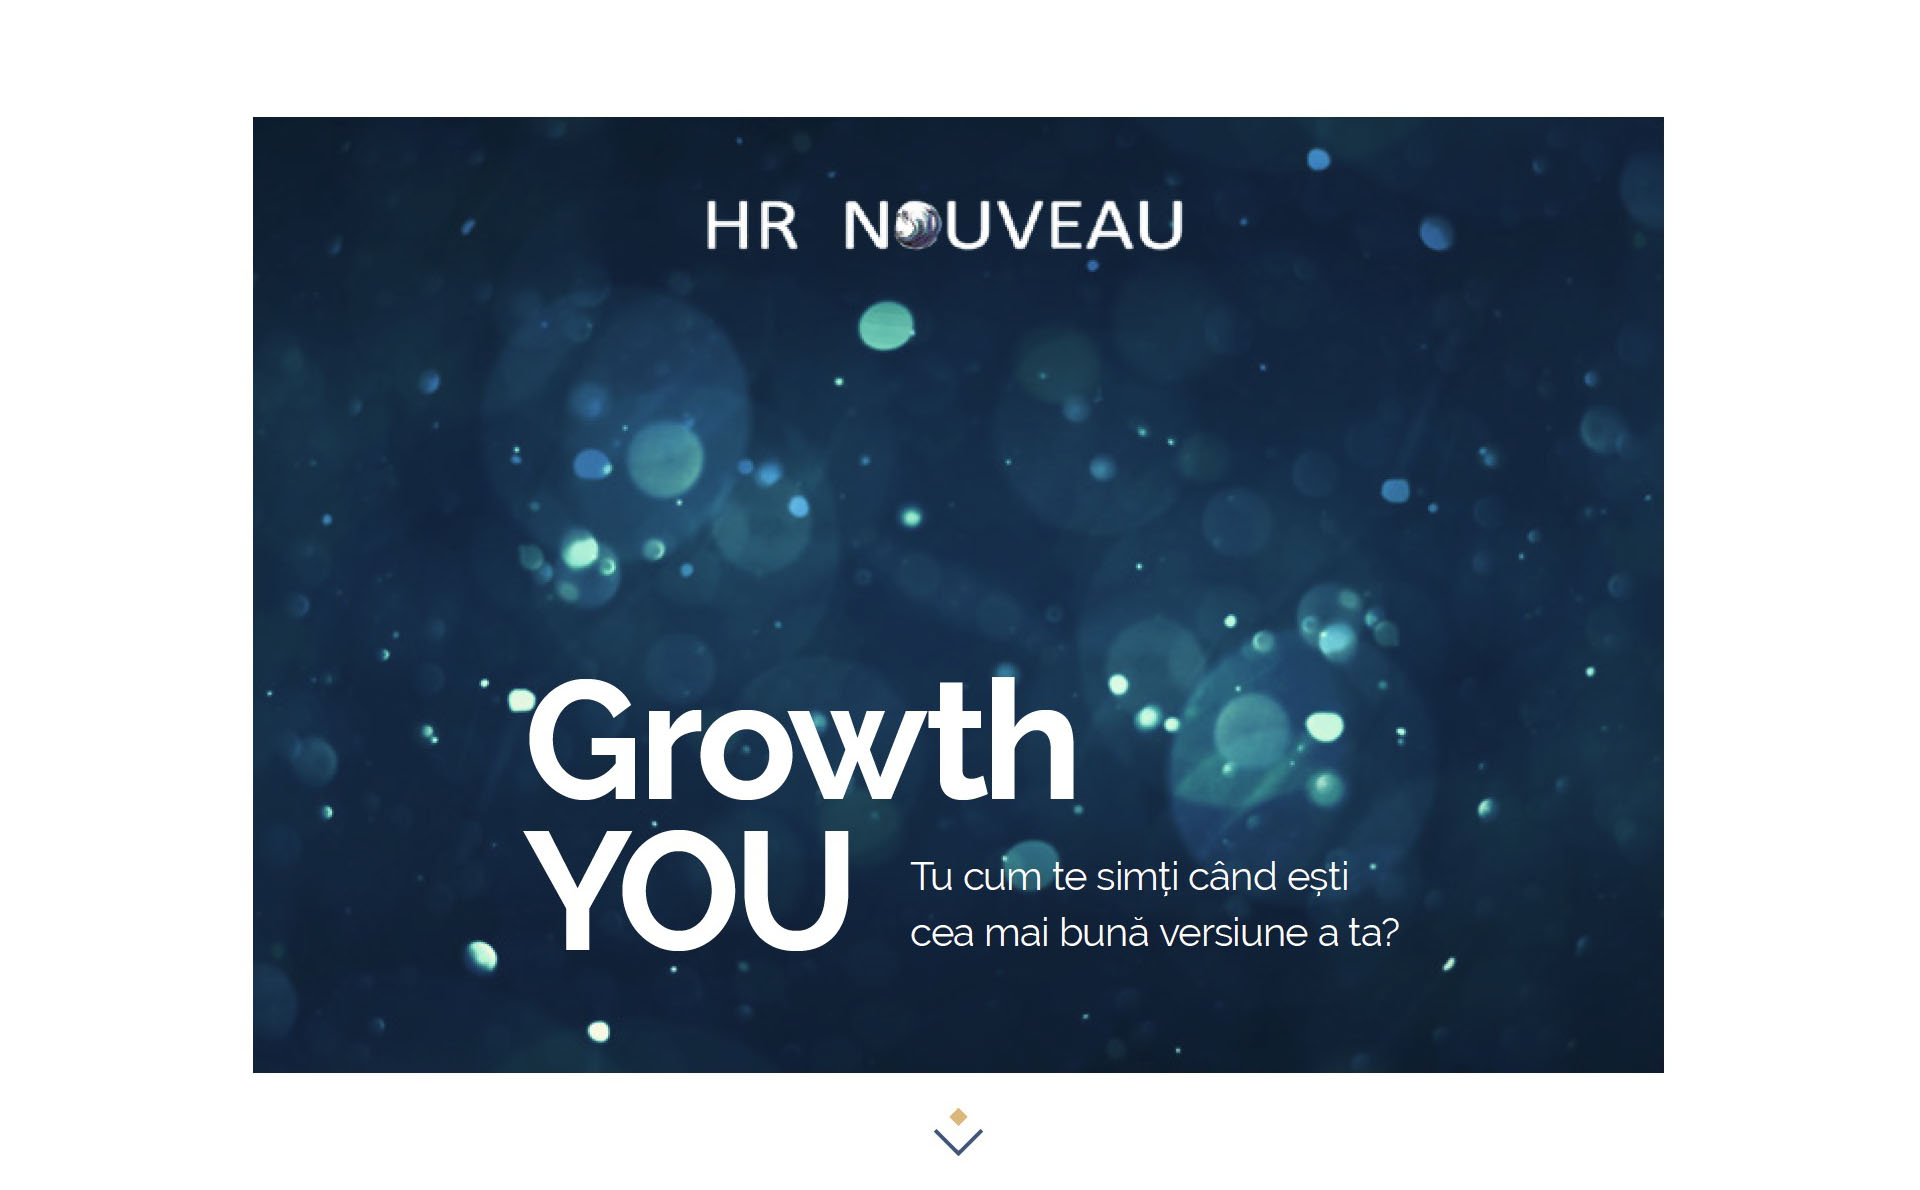 brosura interactiva PDF HR Nouveau Growth